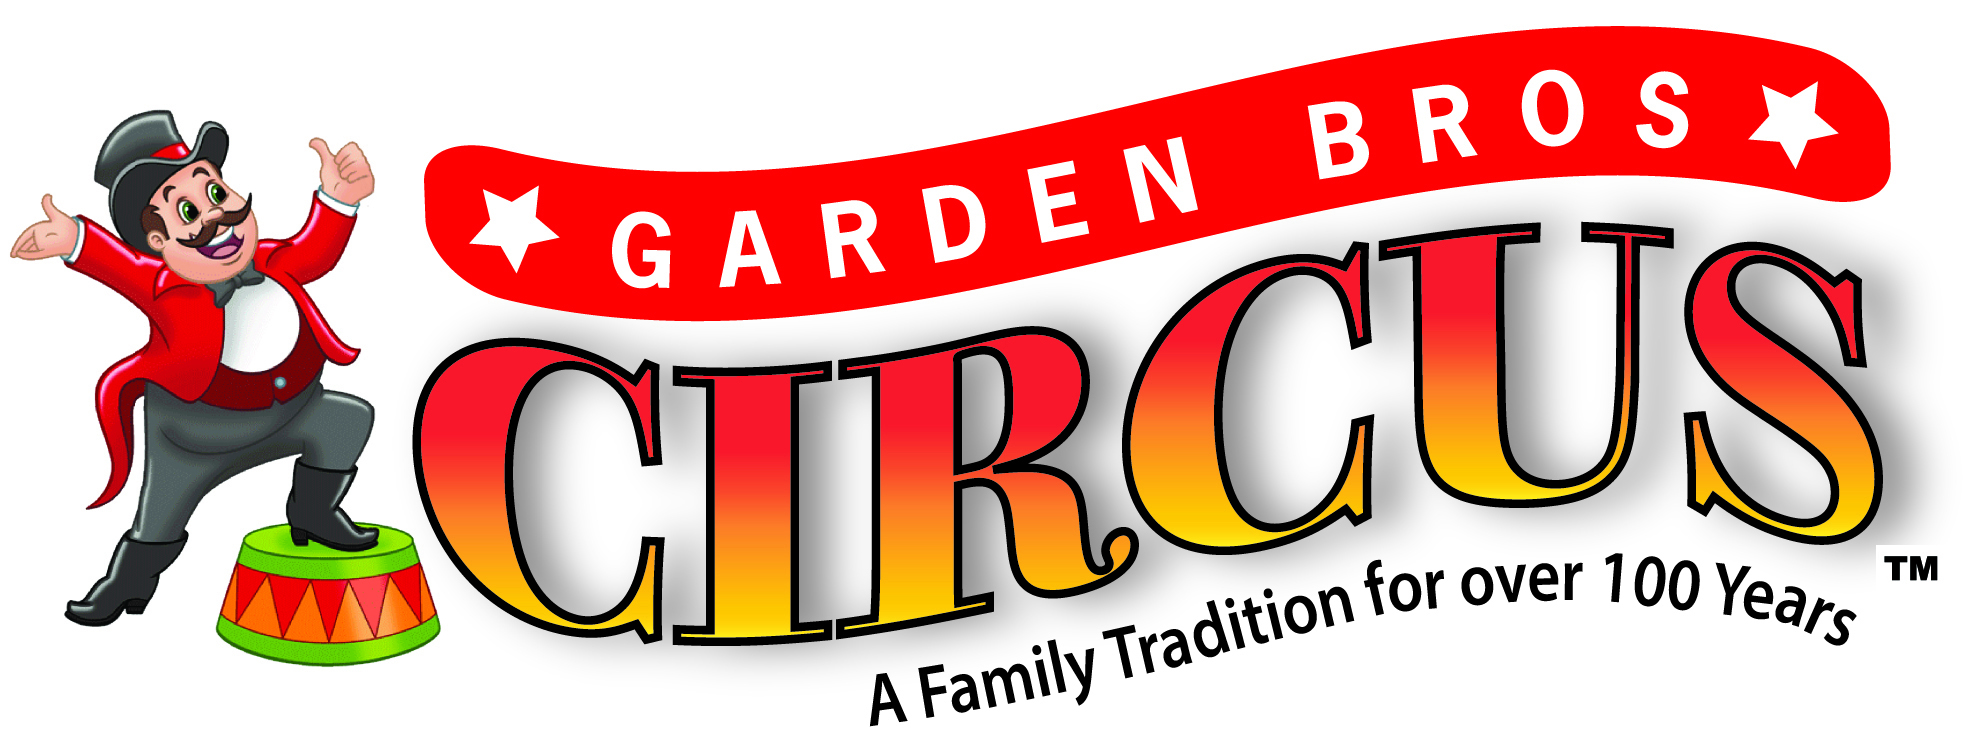 Garden Bros Circus, Lafourche, Louisiana, United States